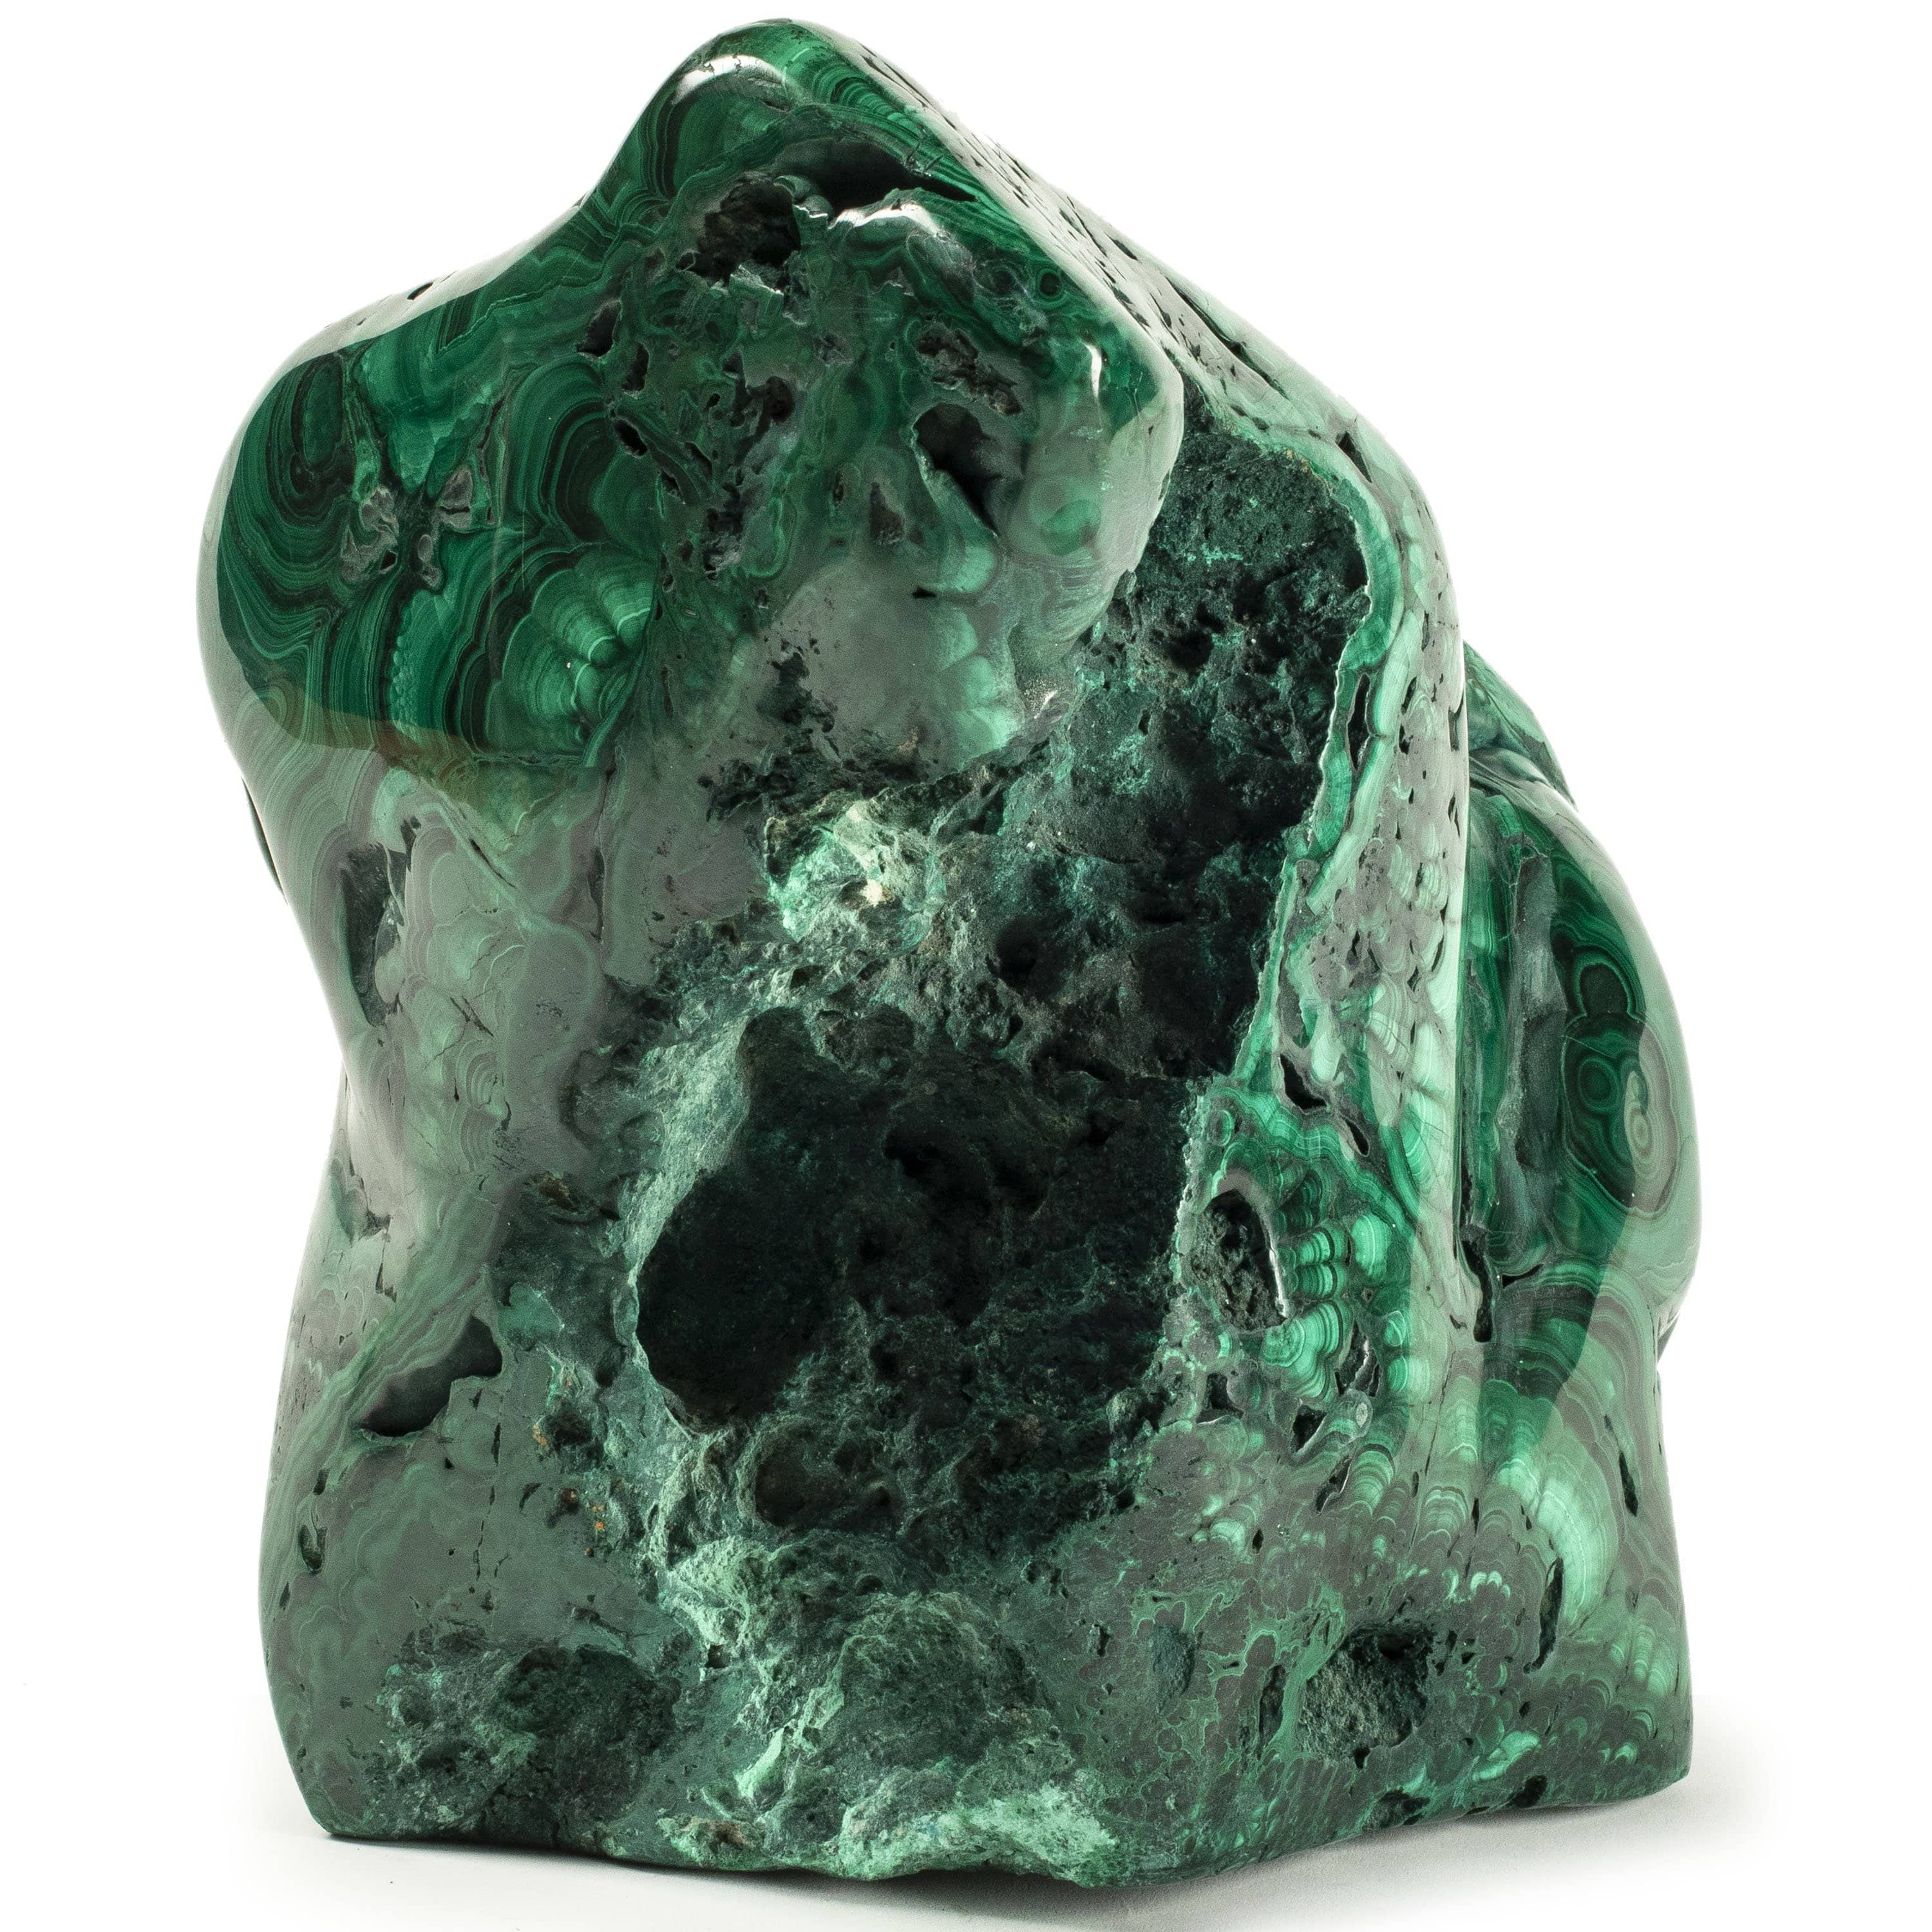 Kalifano Malachite Rare Natural Green Malachite Polished Freeform Specimen from Congo - 15.6 kg / 34.4 lbs MA9800.001